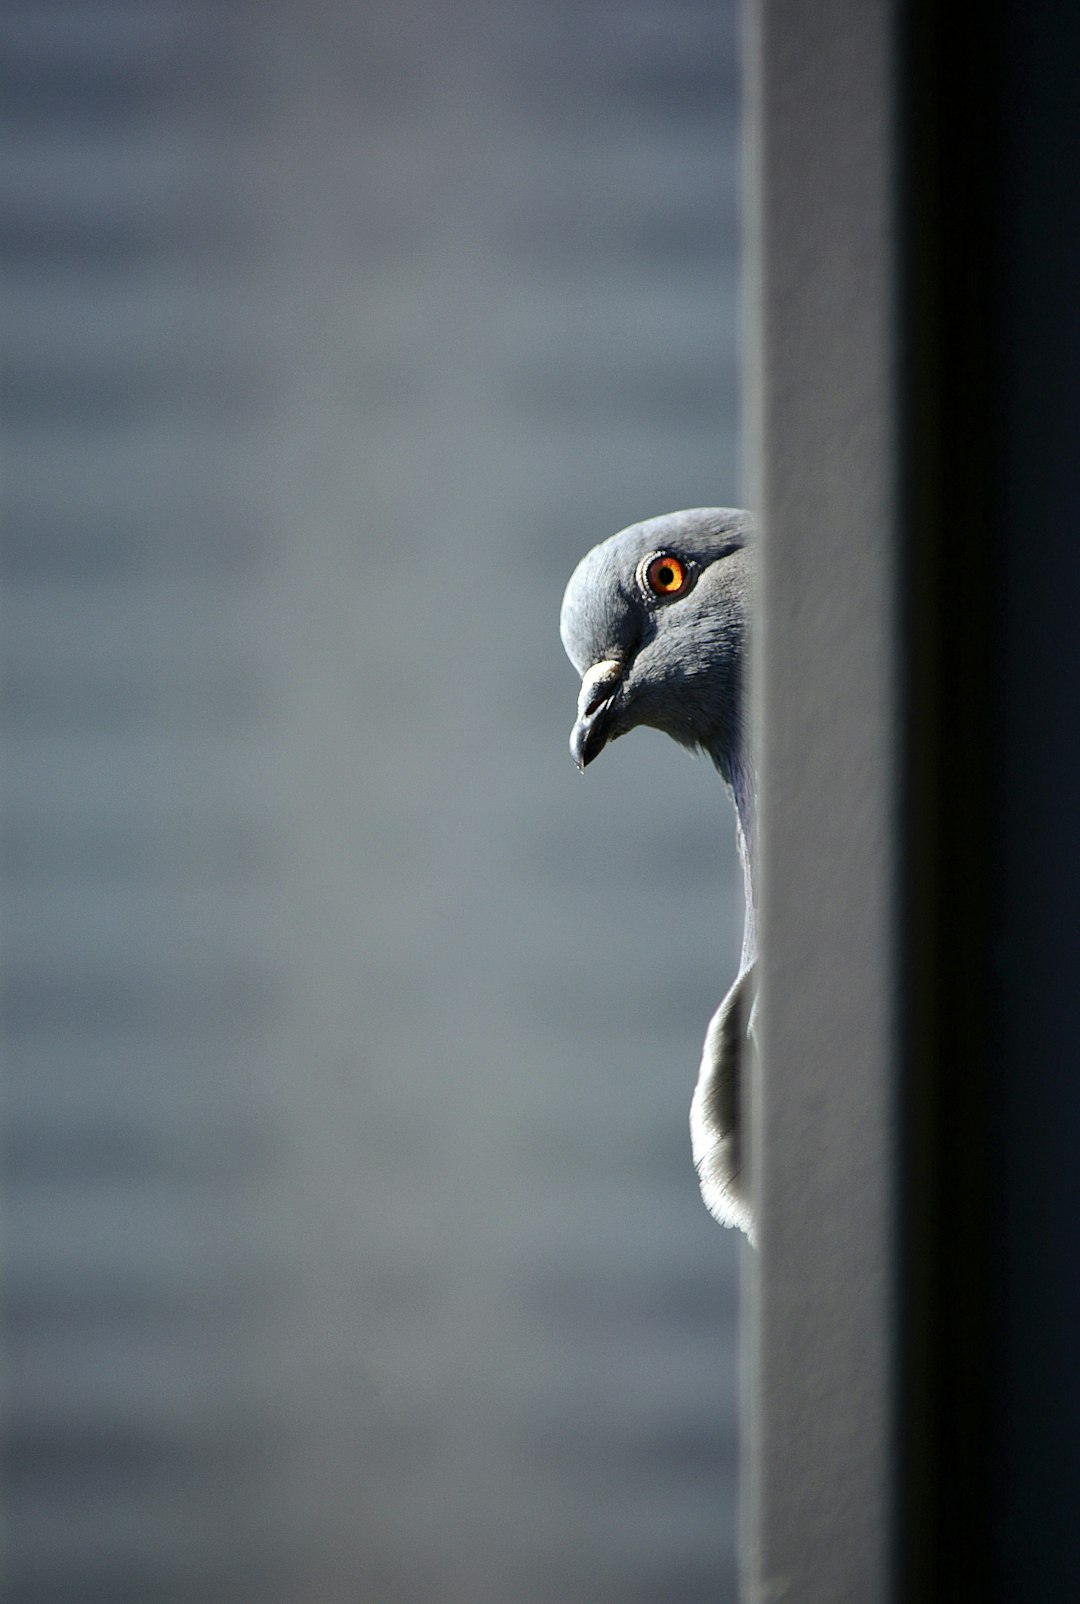  gray and white bird on gray metal bar pigeon